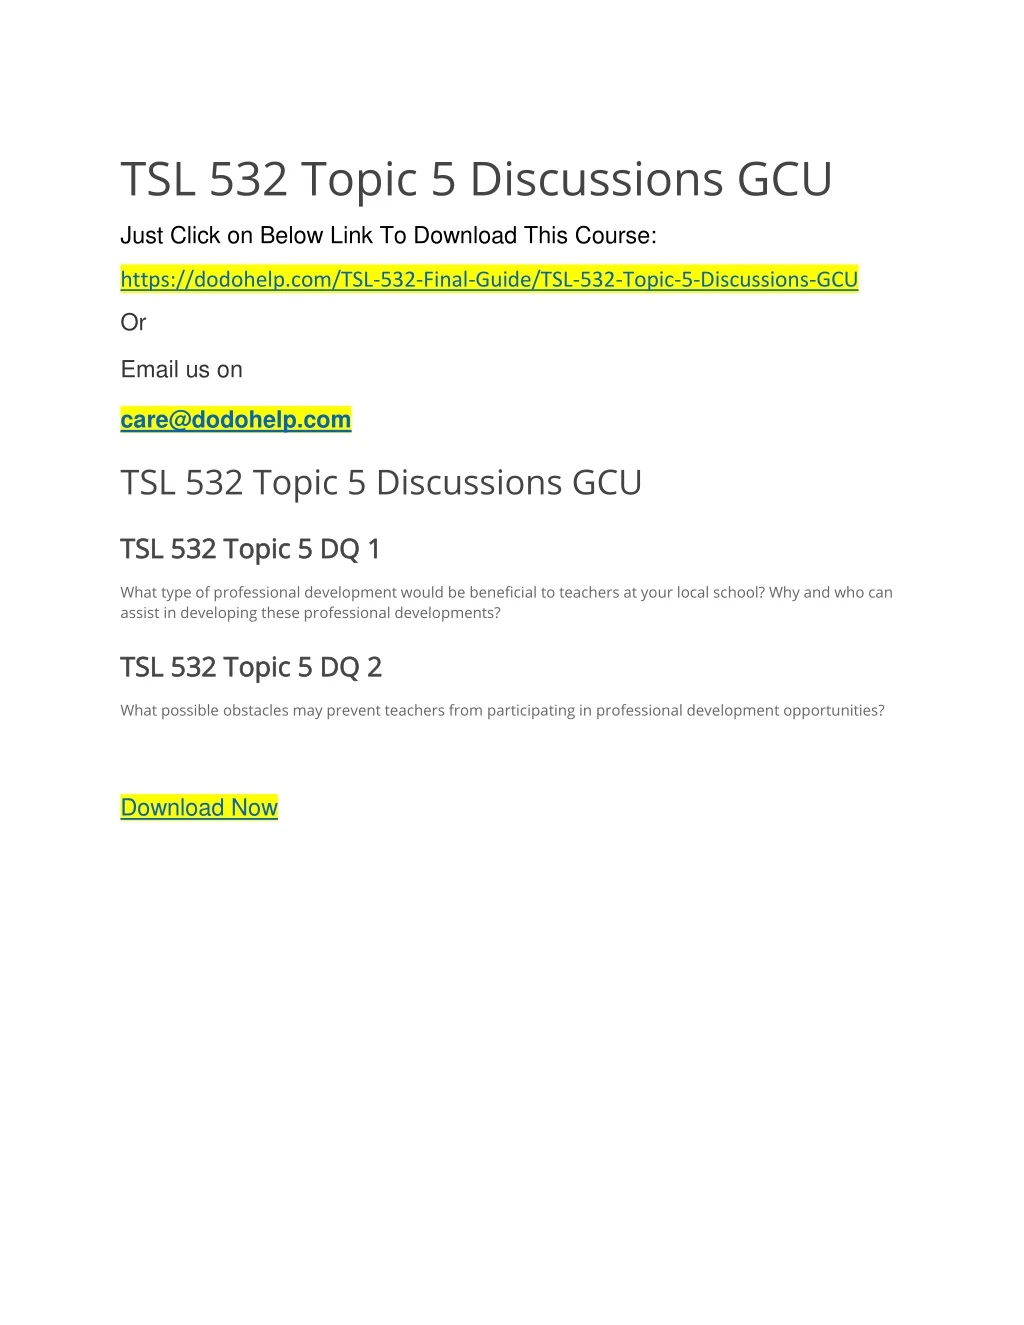 tsl 532 topic 5 discussions gcu just click